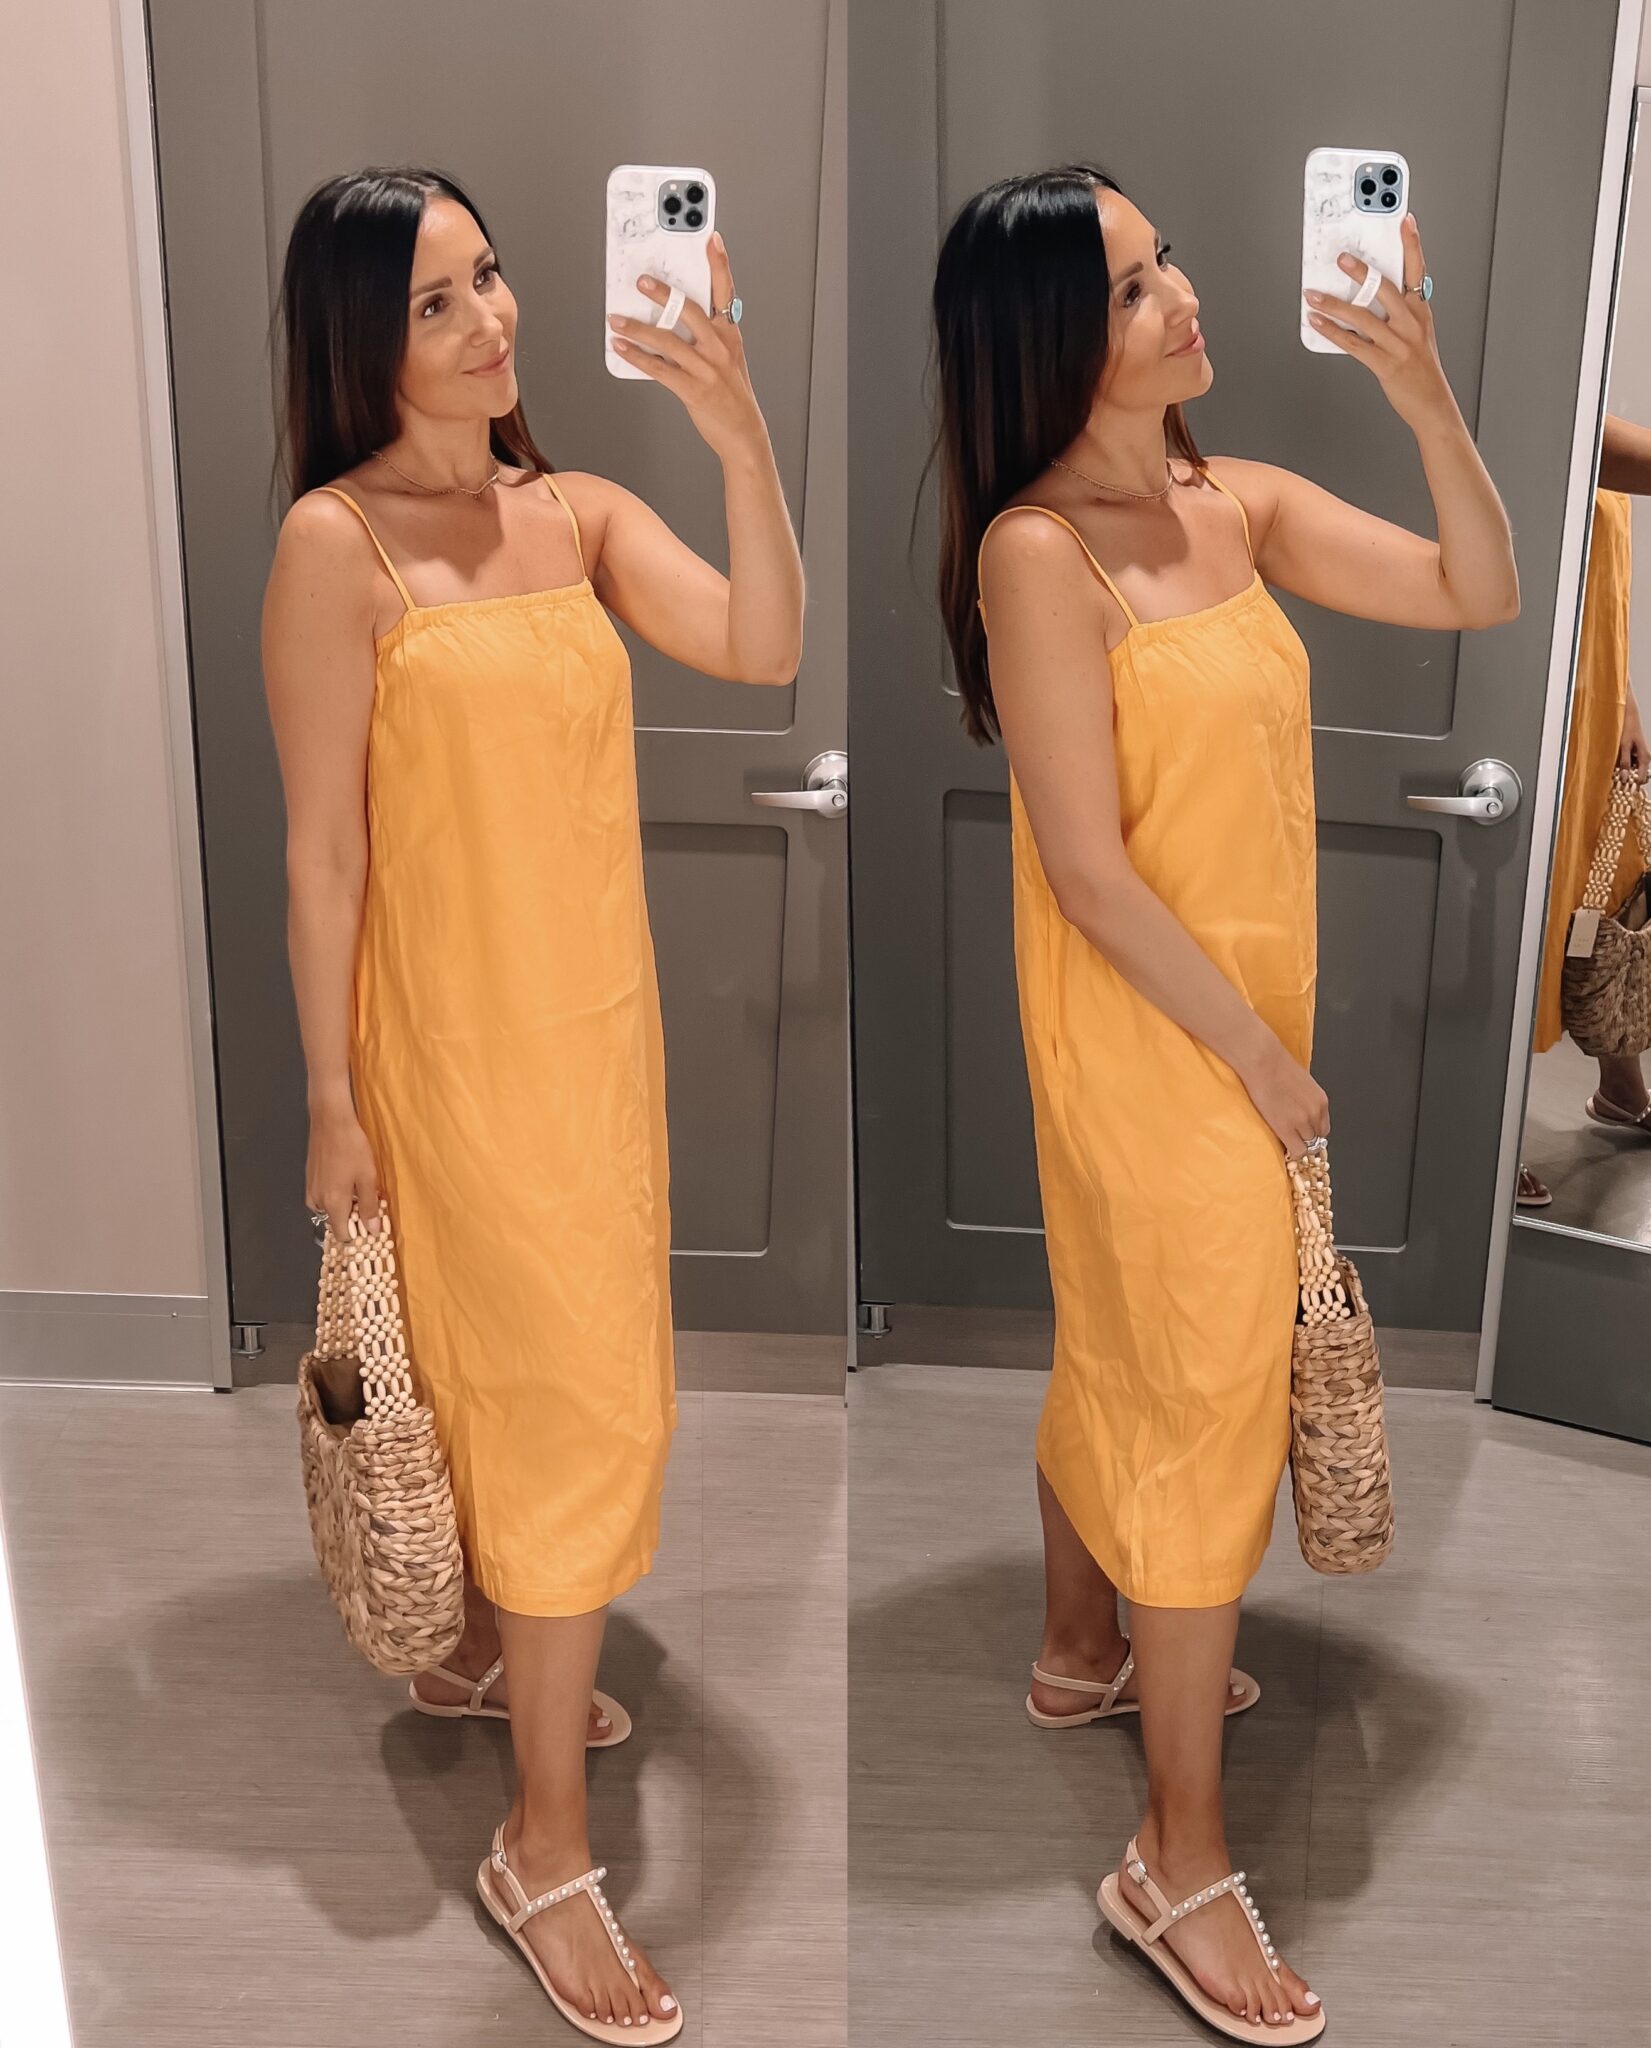 target yellow dress